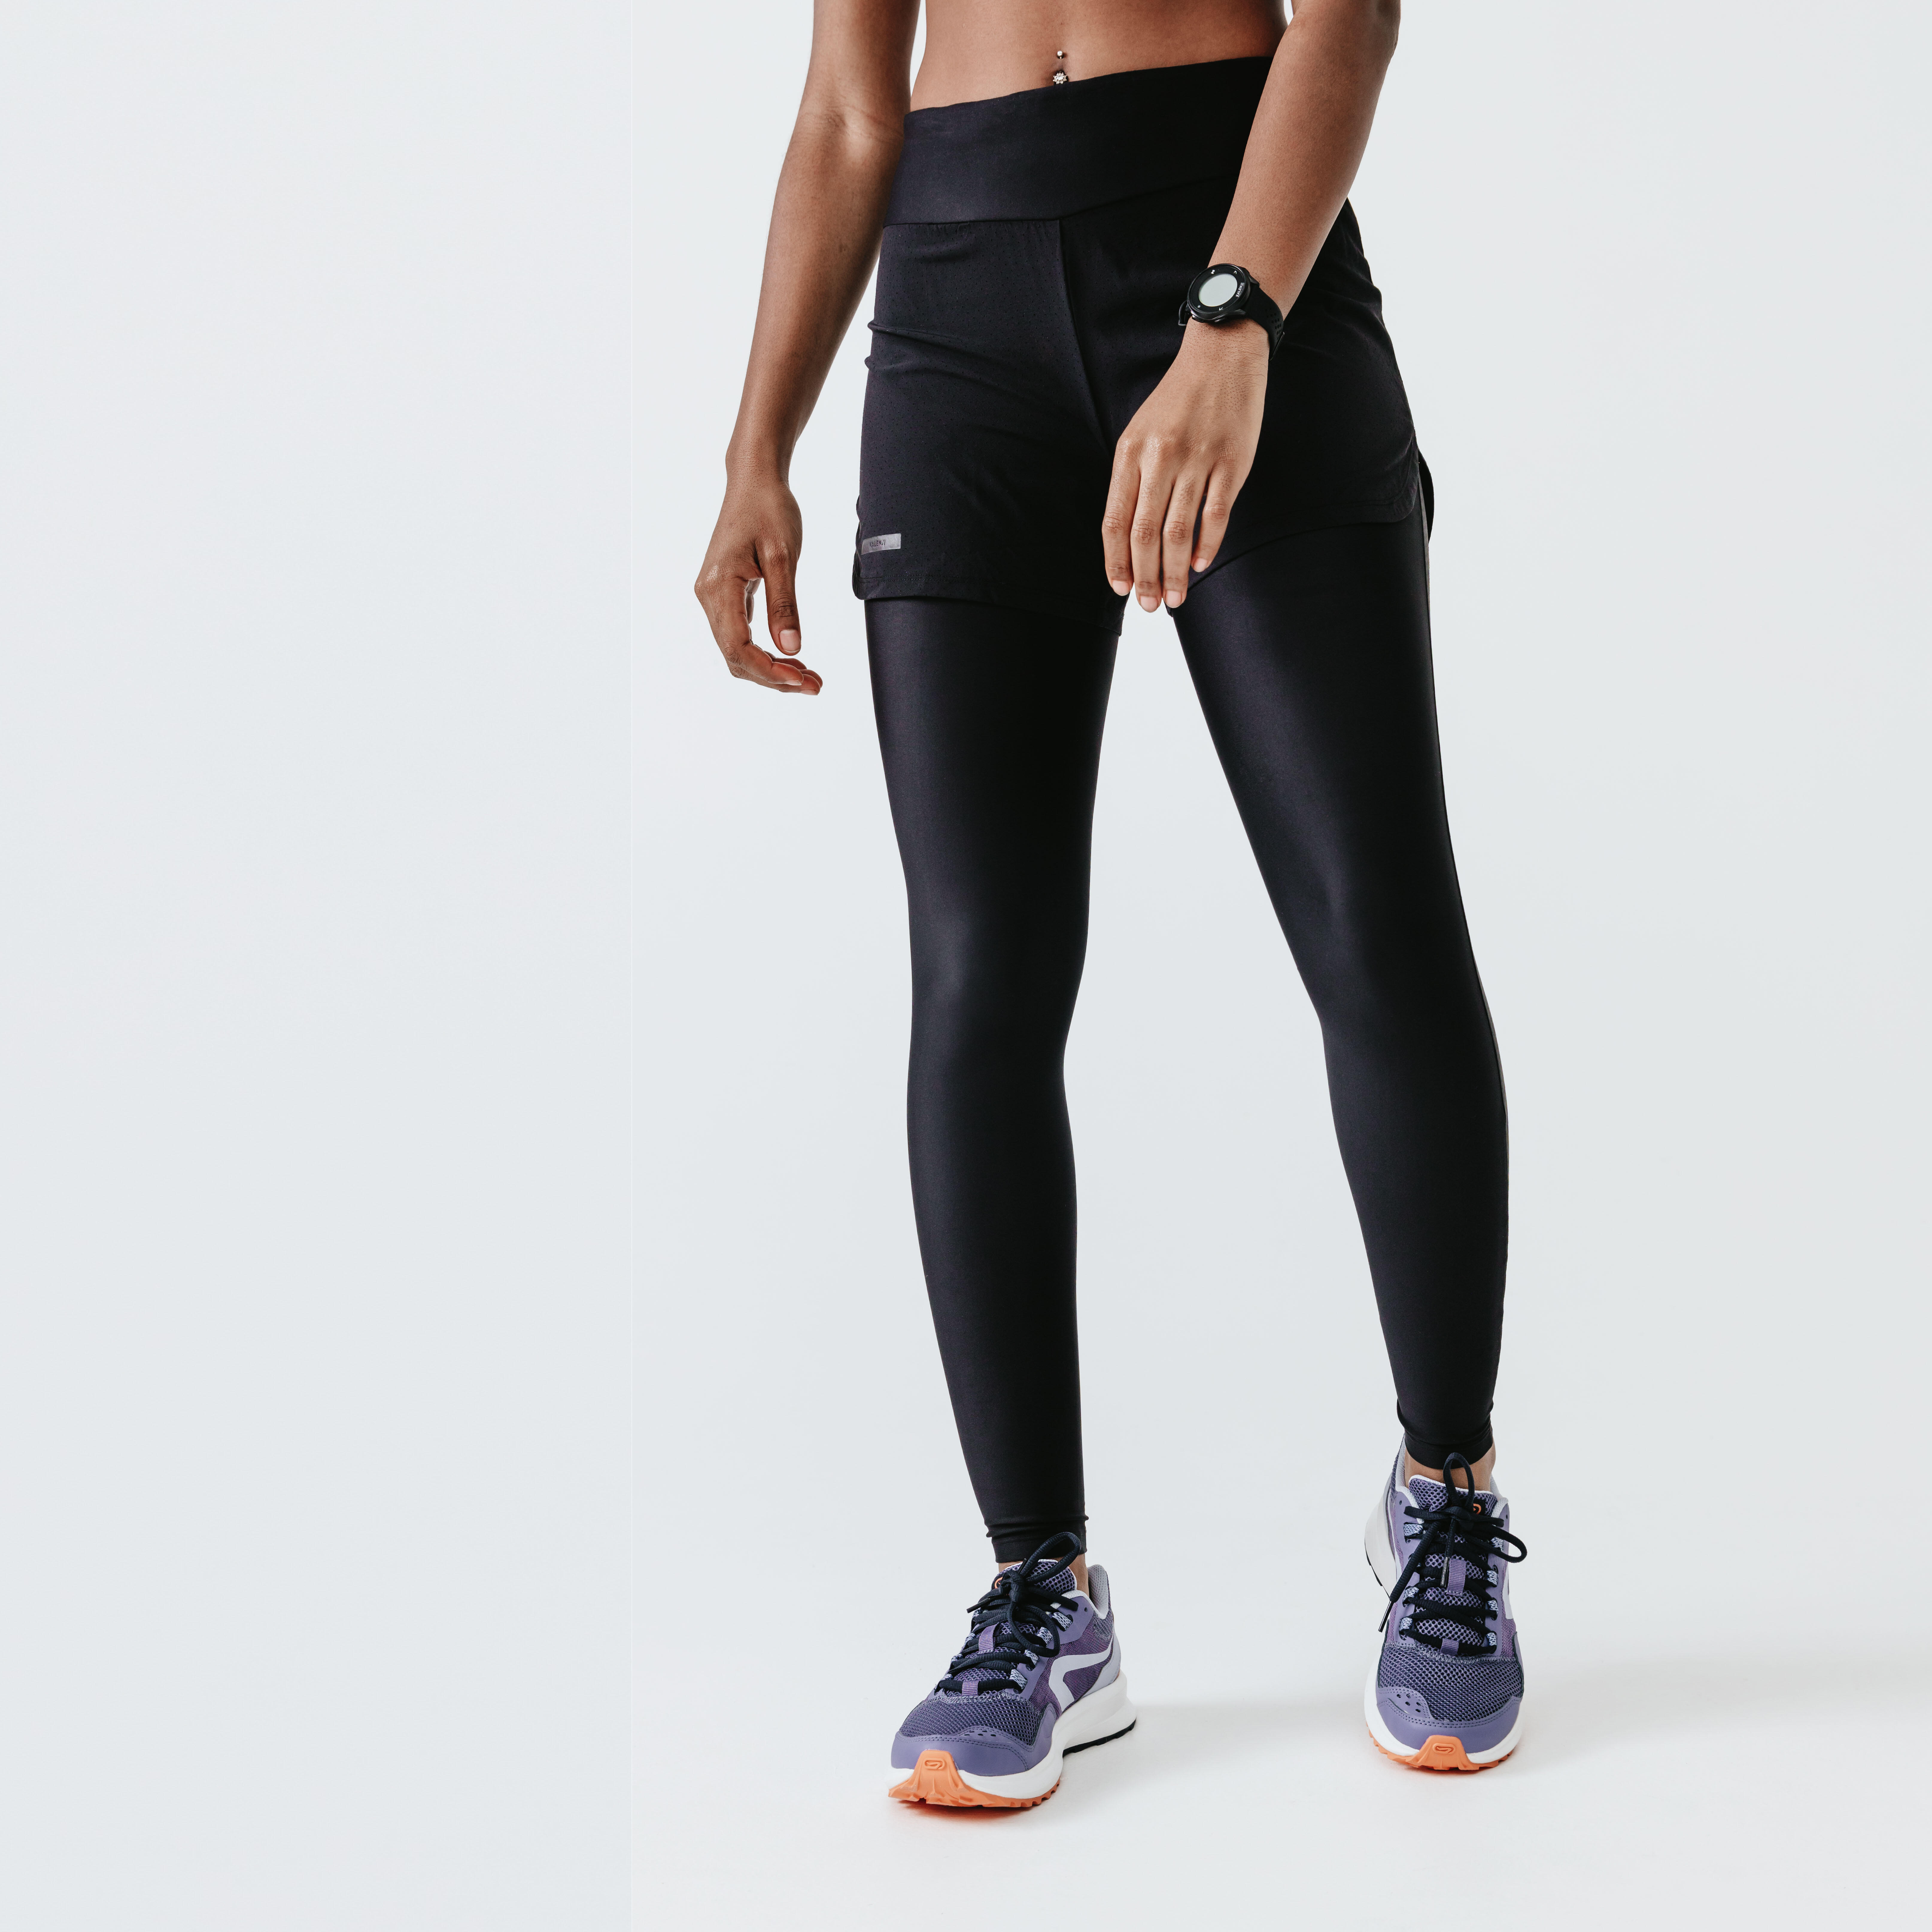 Women's 2-in-1 Running Tights - Black